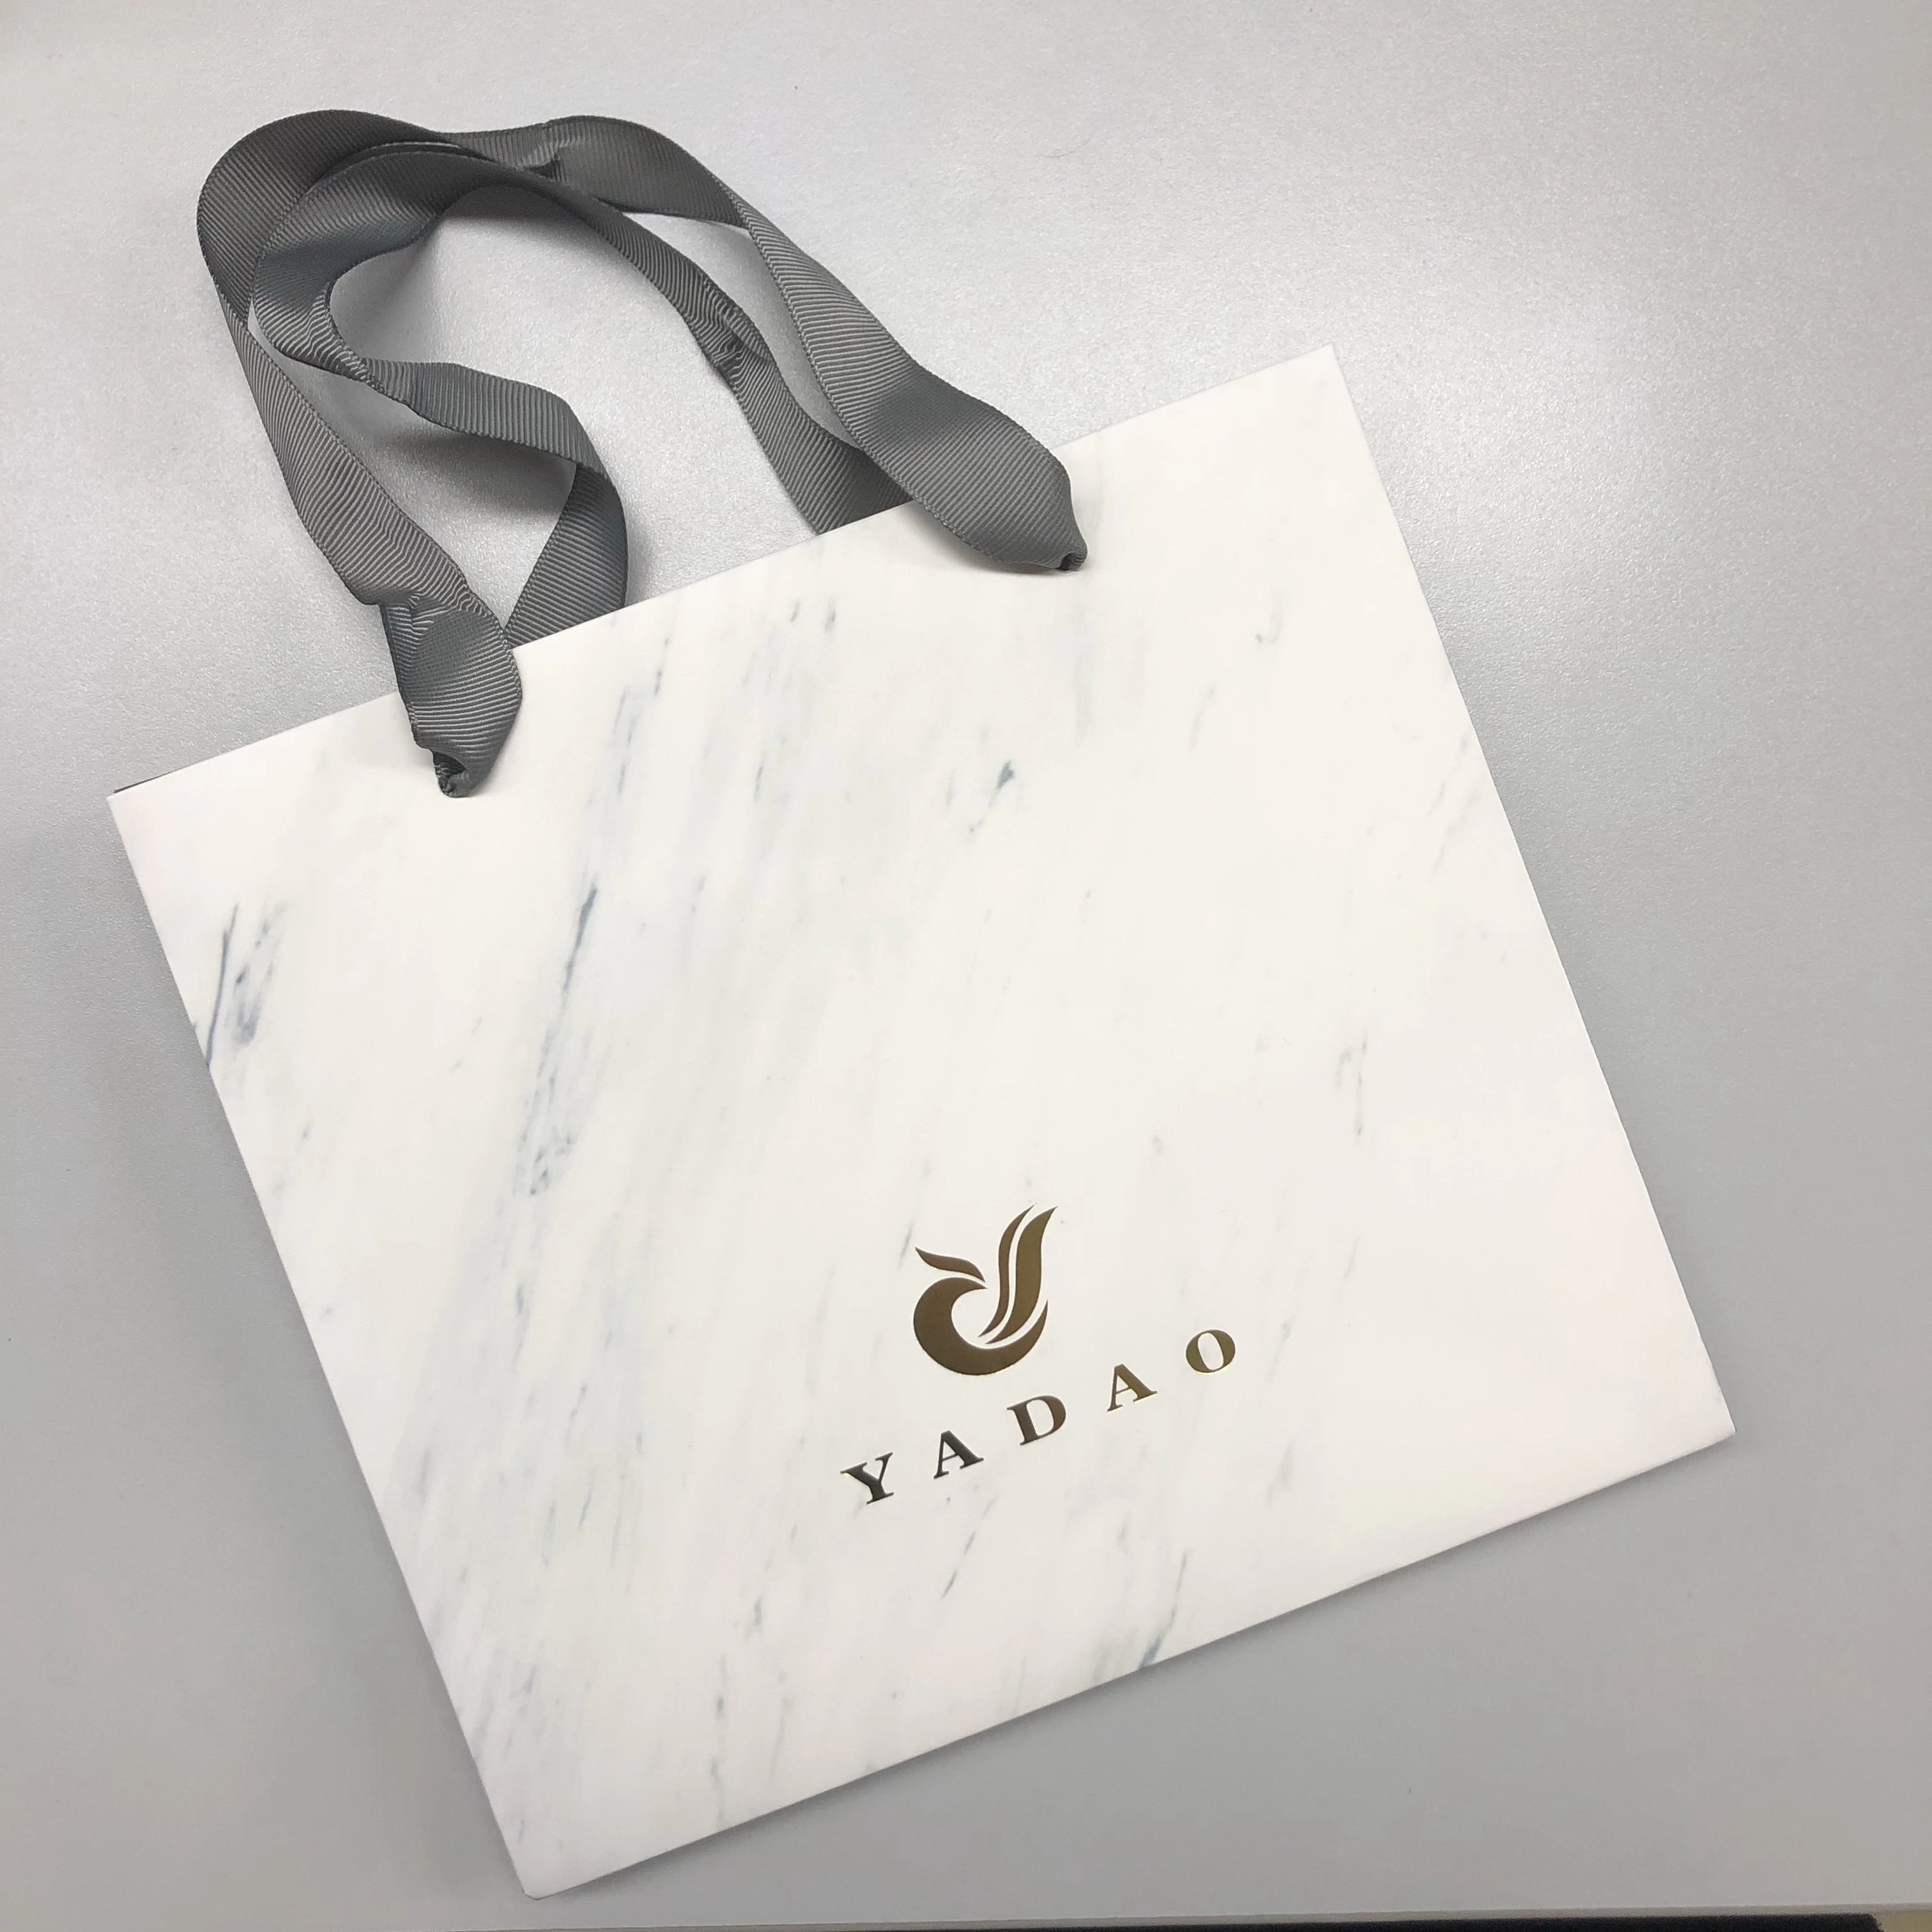 Yadao handmade shopping bag marble texture printing paper bag with hot stamping logo and ribbon handle